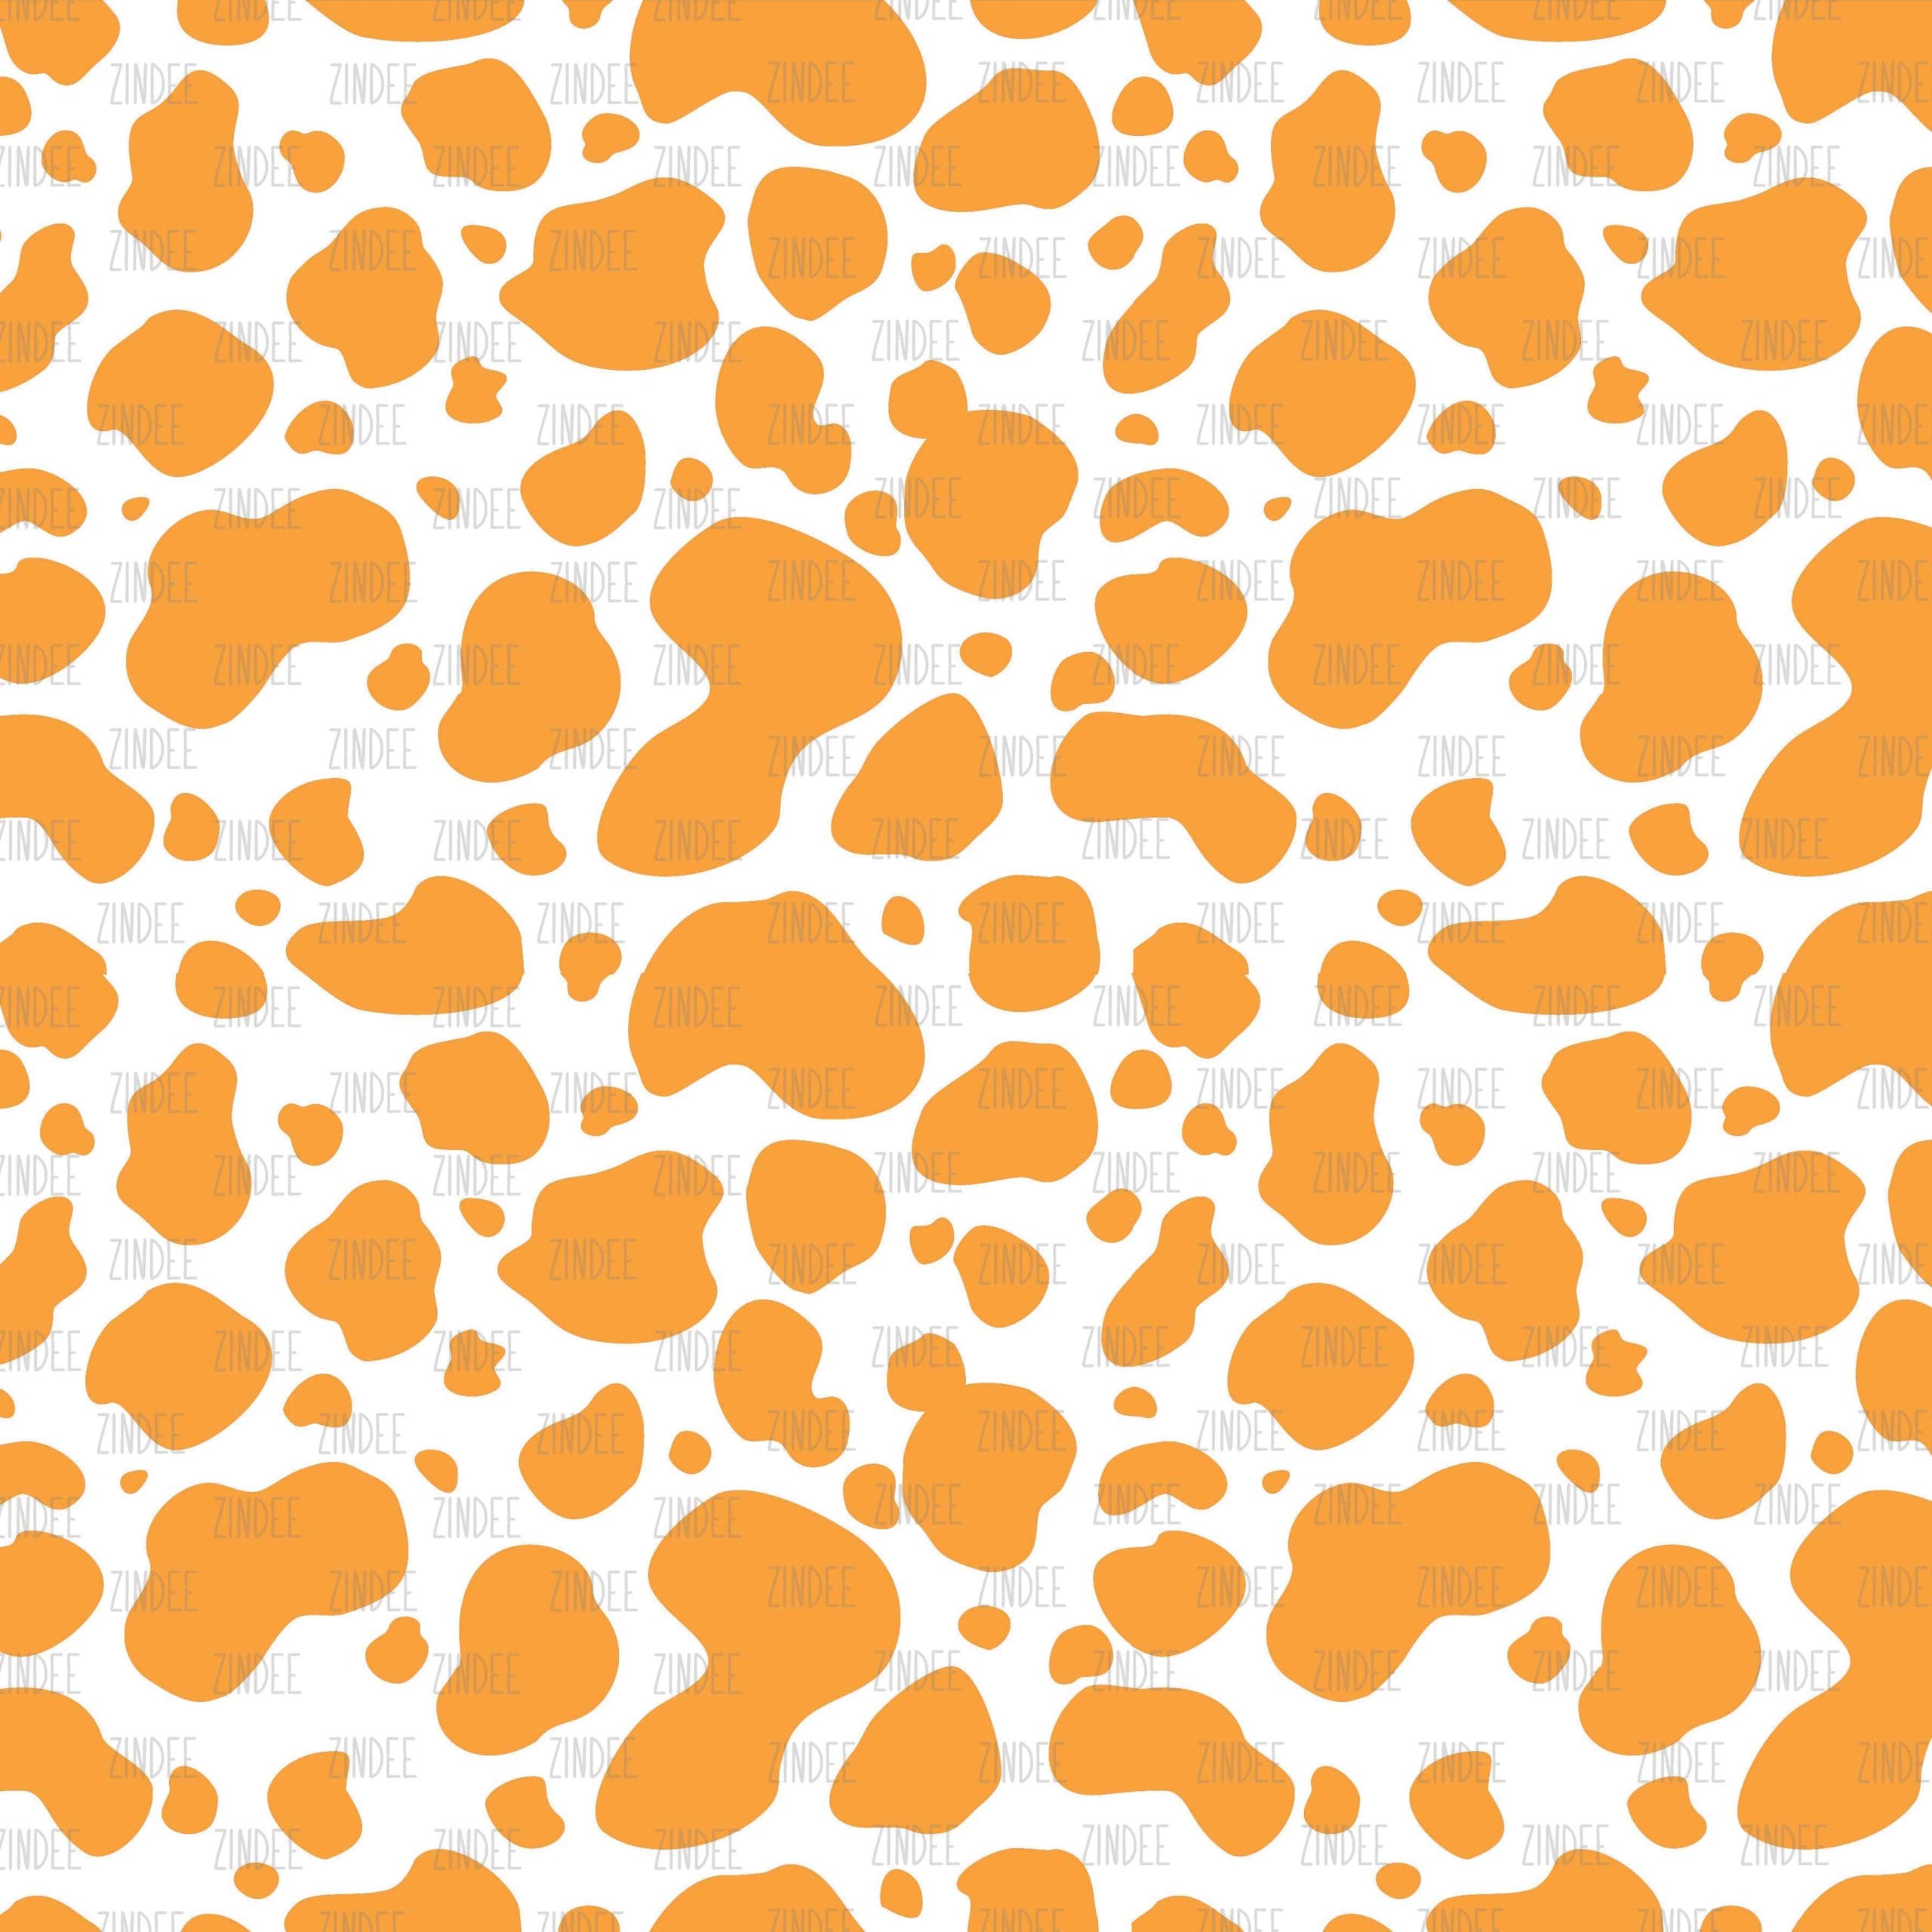 https://zindee.com/wp-content/uploads/2023/10/cow-print-orange-pp-scaled-1.jpg